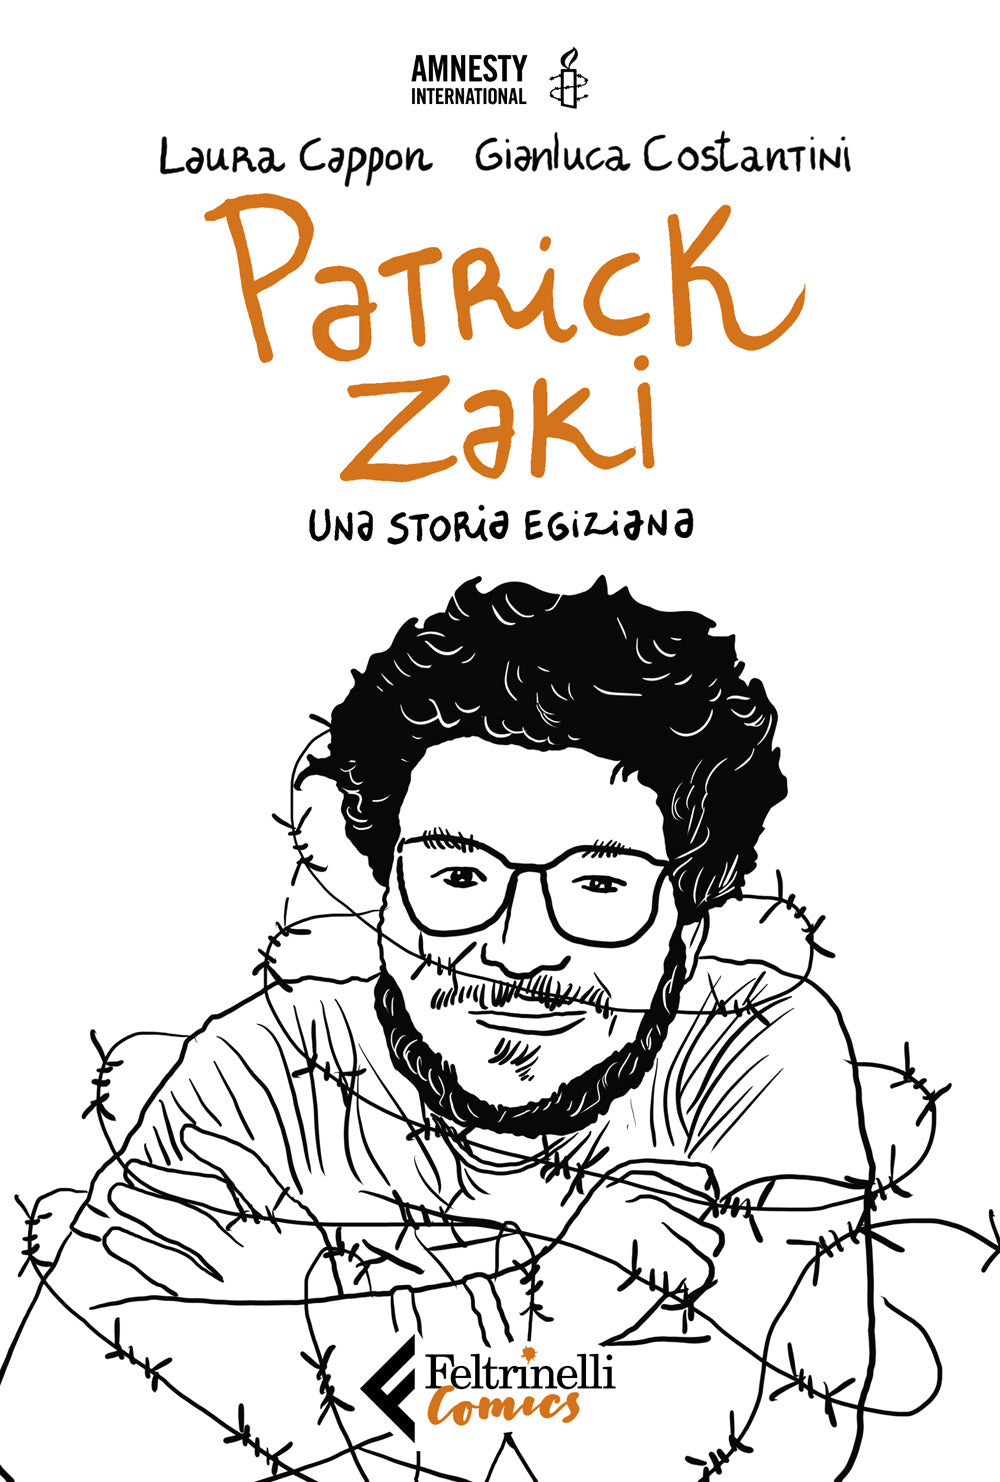 Patrick Zaki. Una storia egiziana.